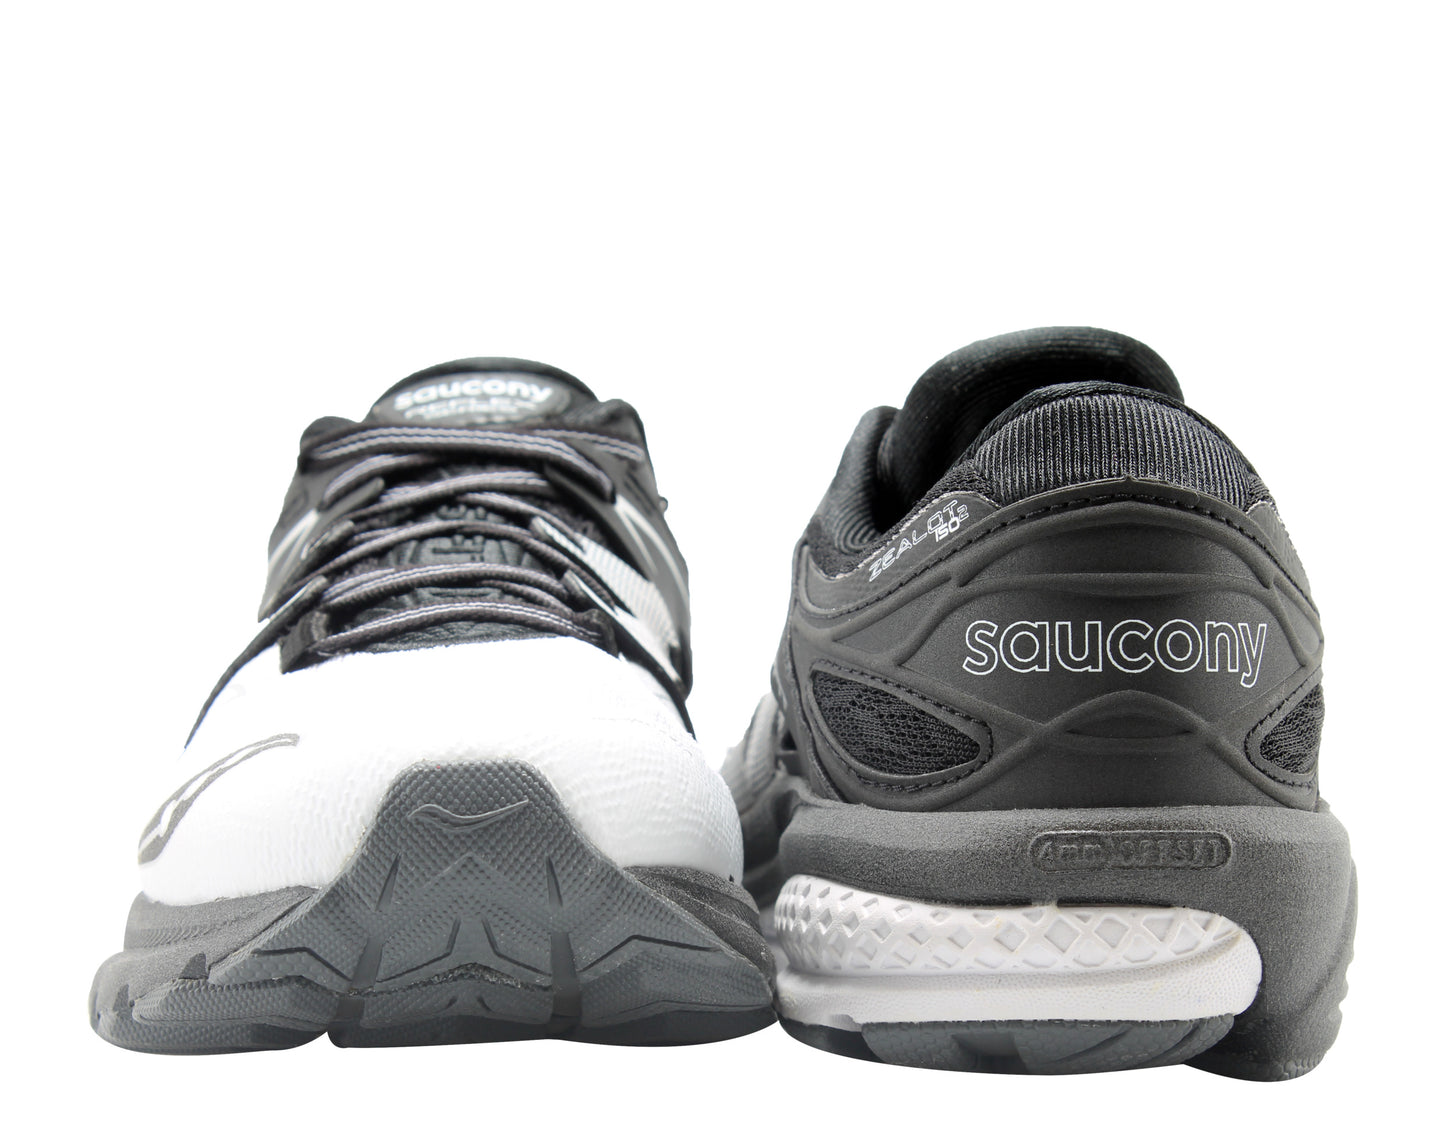 Saucony Zealot ISO 2 Reflex White/Black/Silver Women's Running Shoes S10332-1